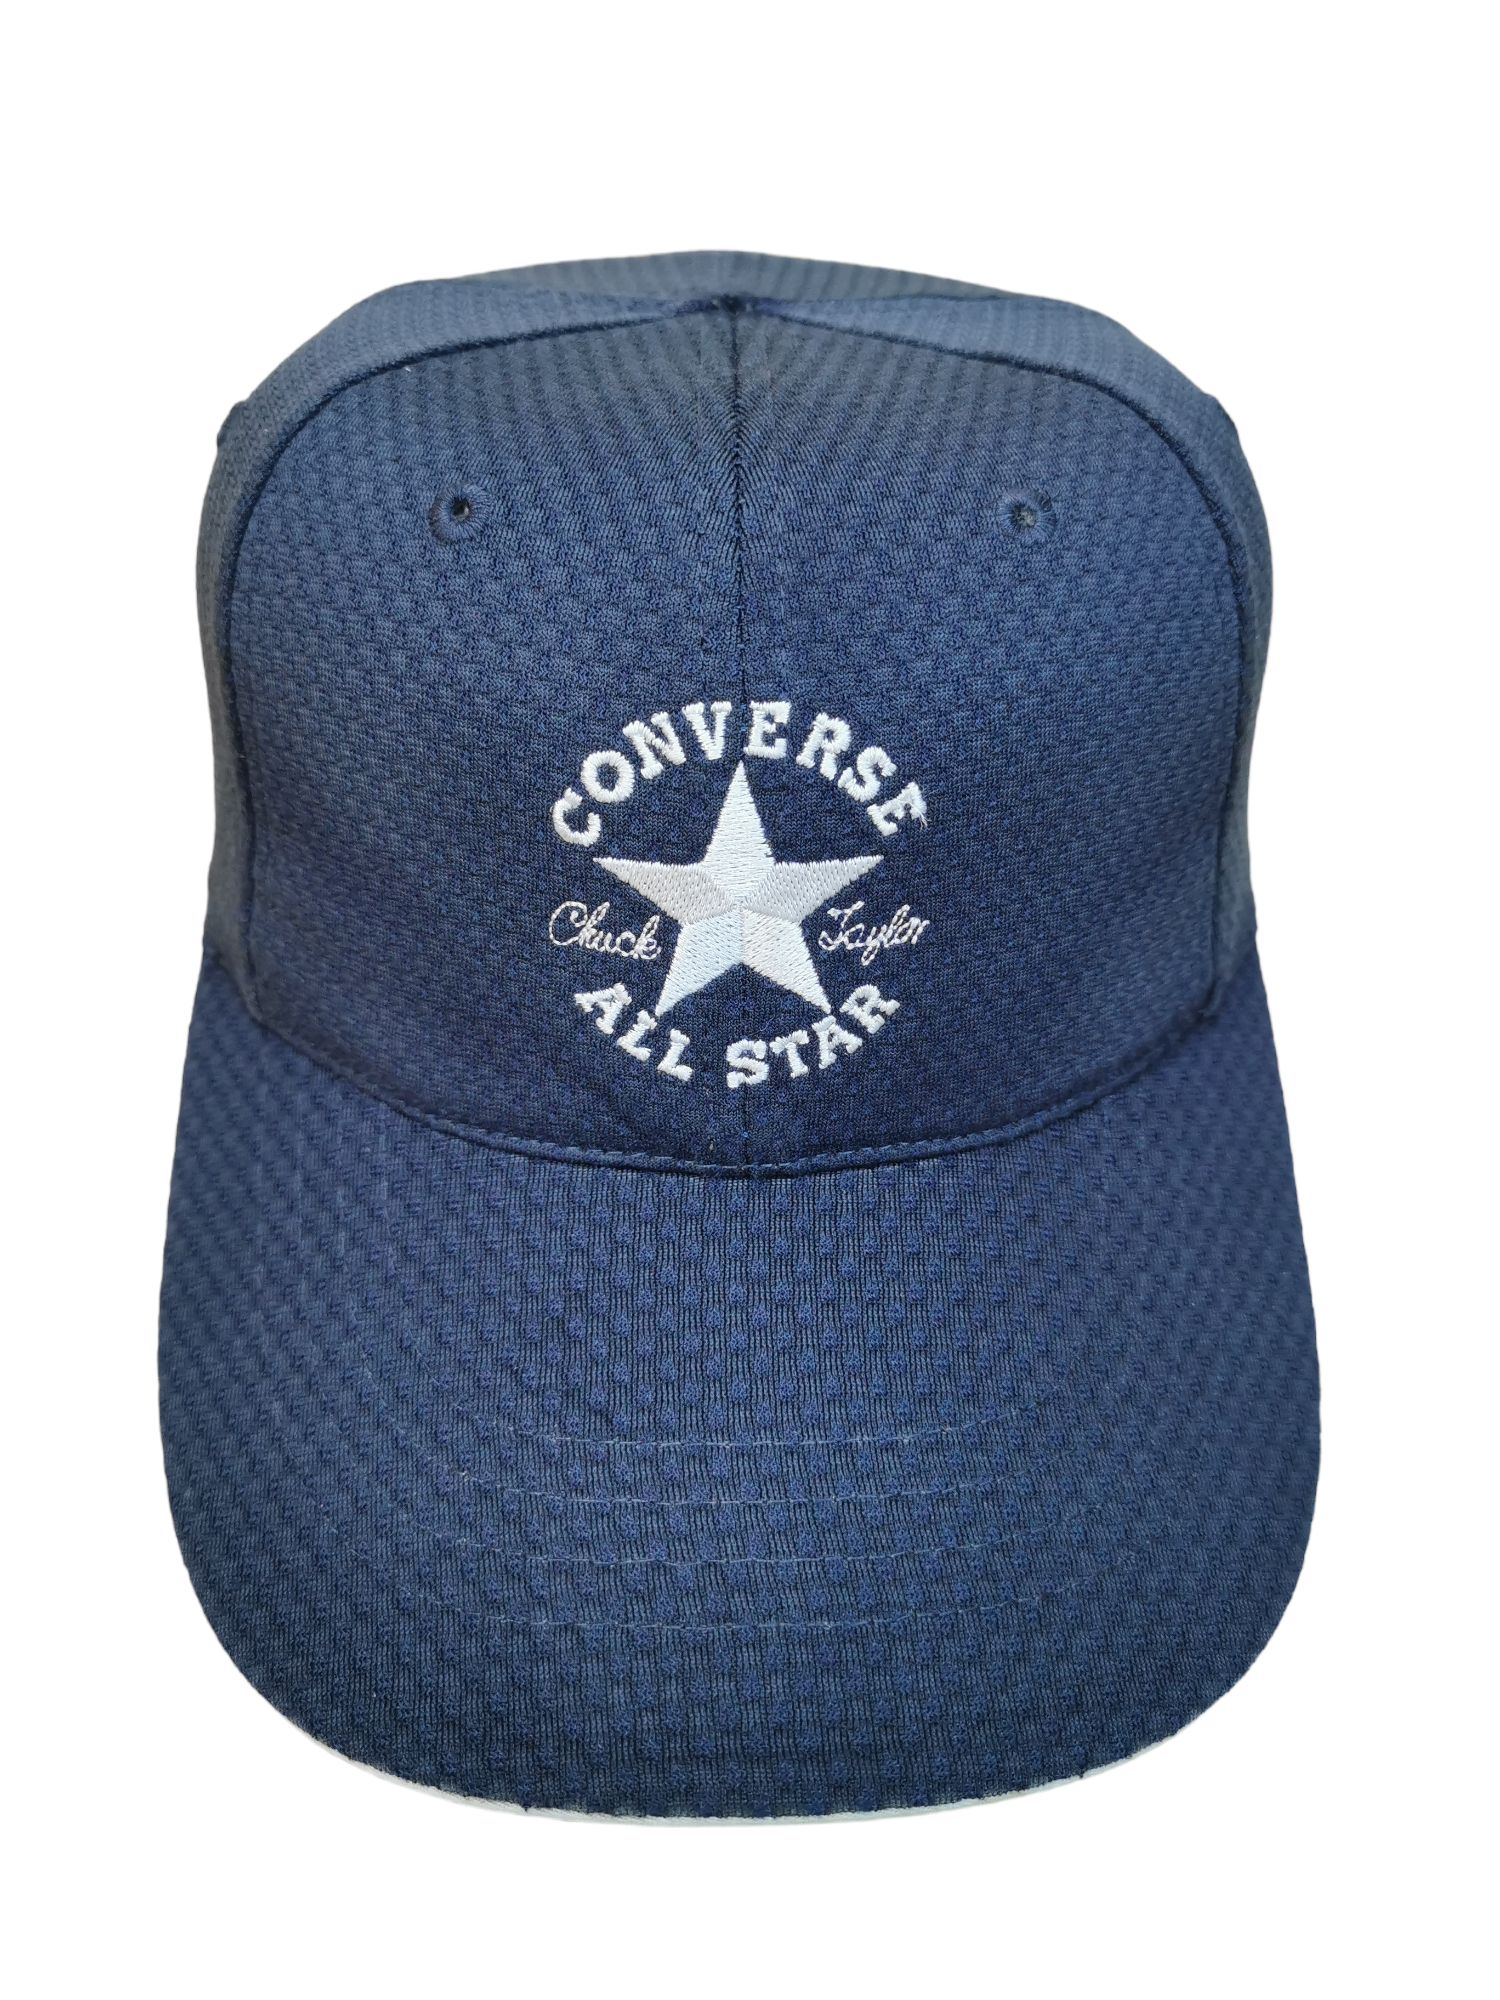 VINTAGE CONVERSE ALL STAR CHUCK TAYLOR STREETWEAR HAT CAP - 1